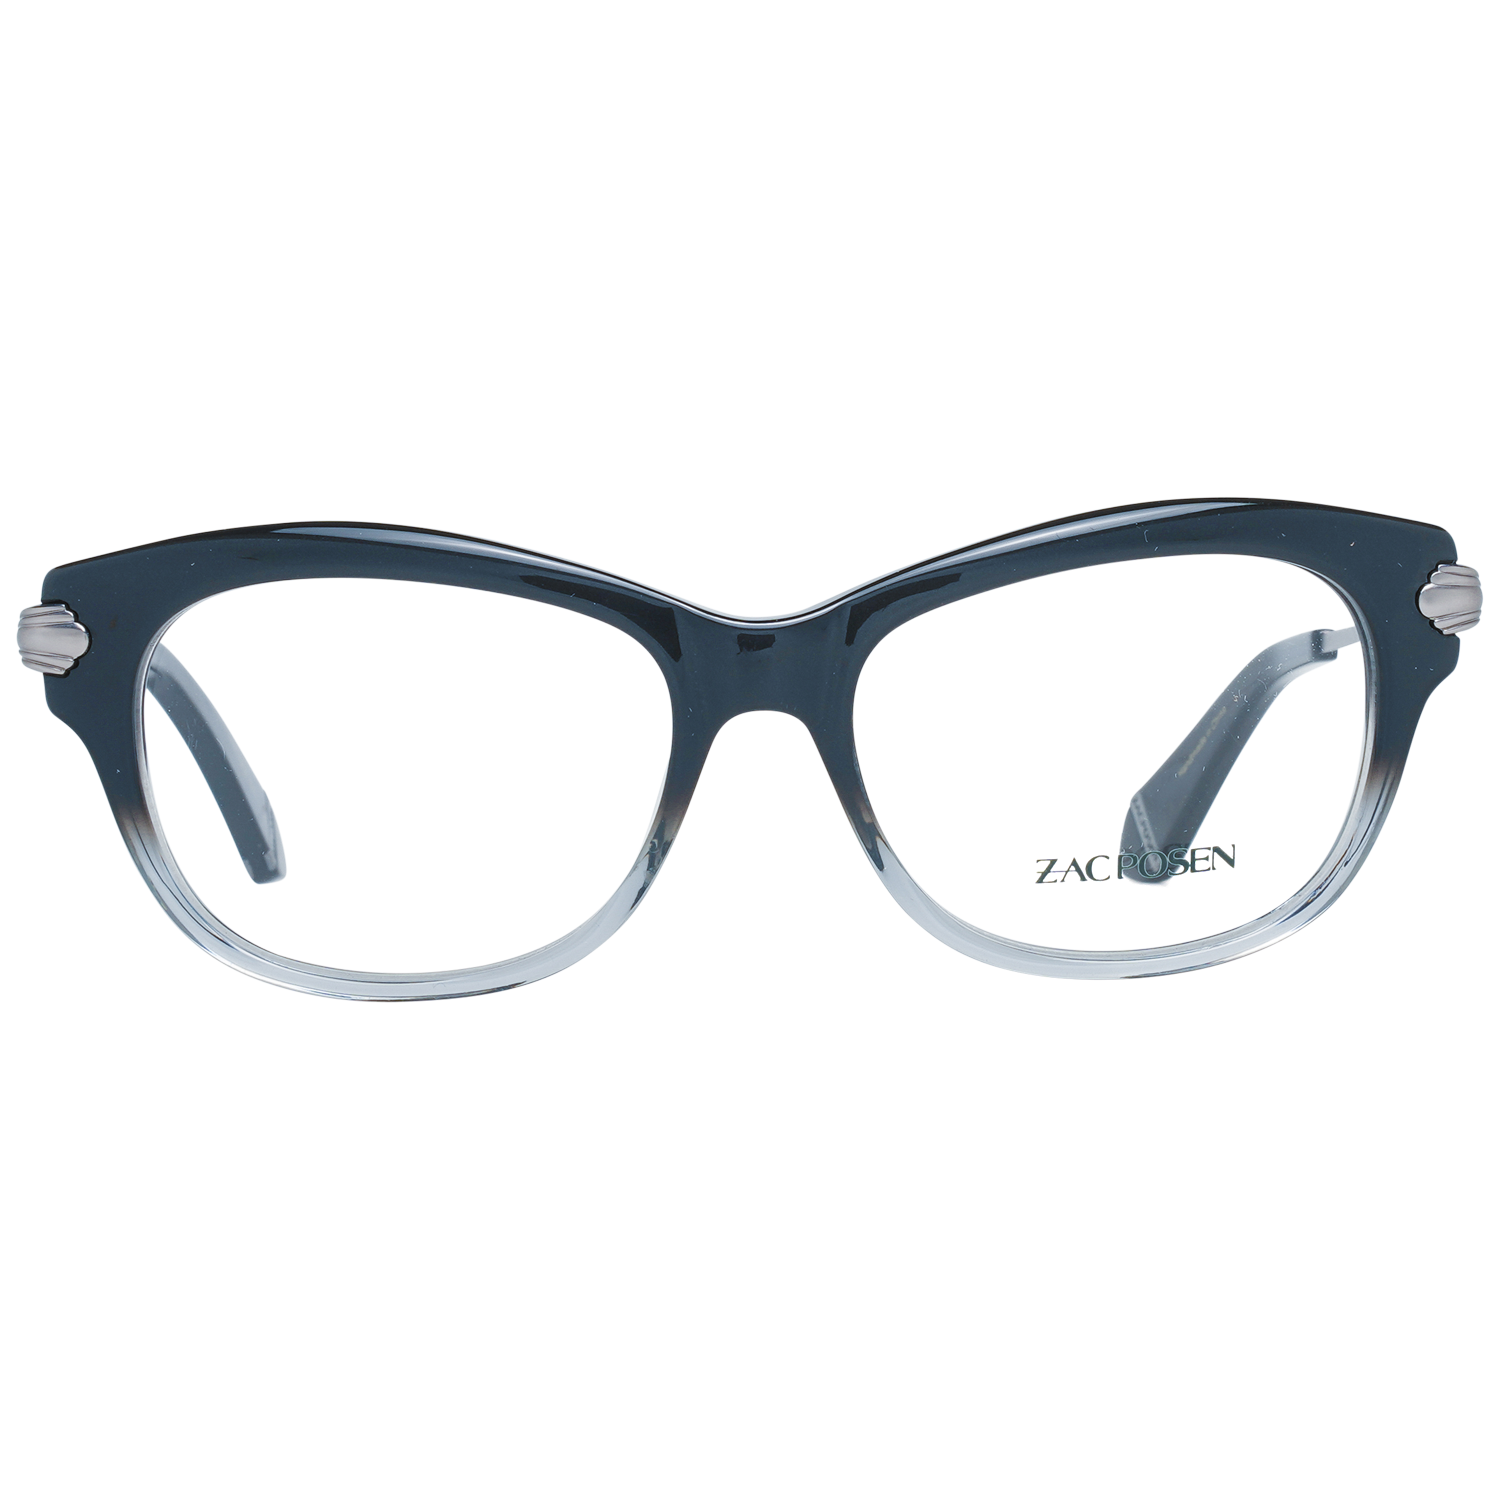 Zac Posen Frames Zac Posen Optical Frame ZLIS SM 51 Lisa Eyeglasses Eyewear UK USA Australia 